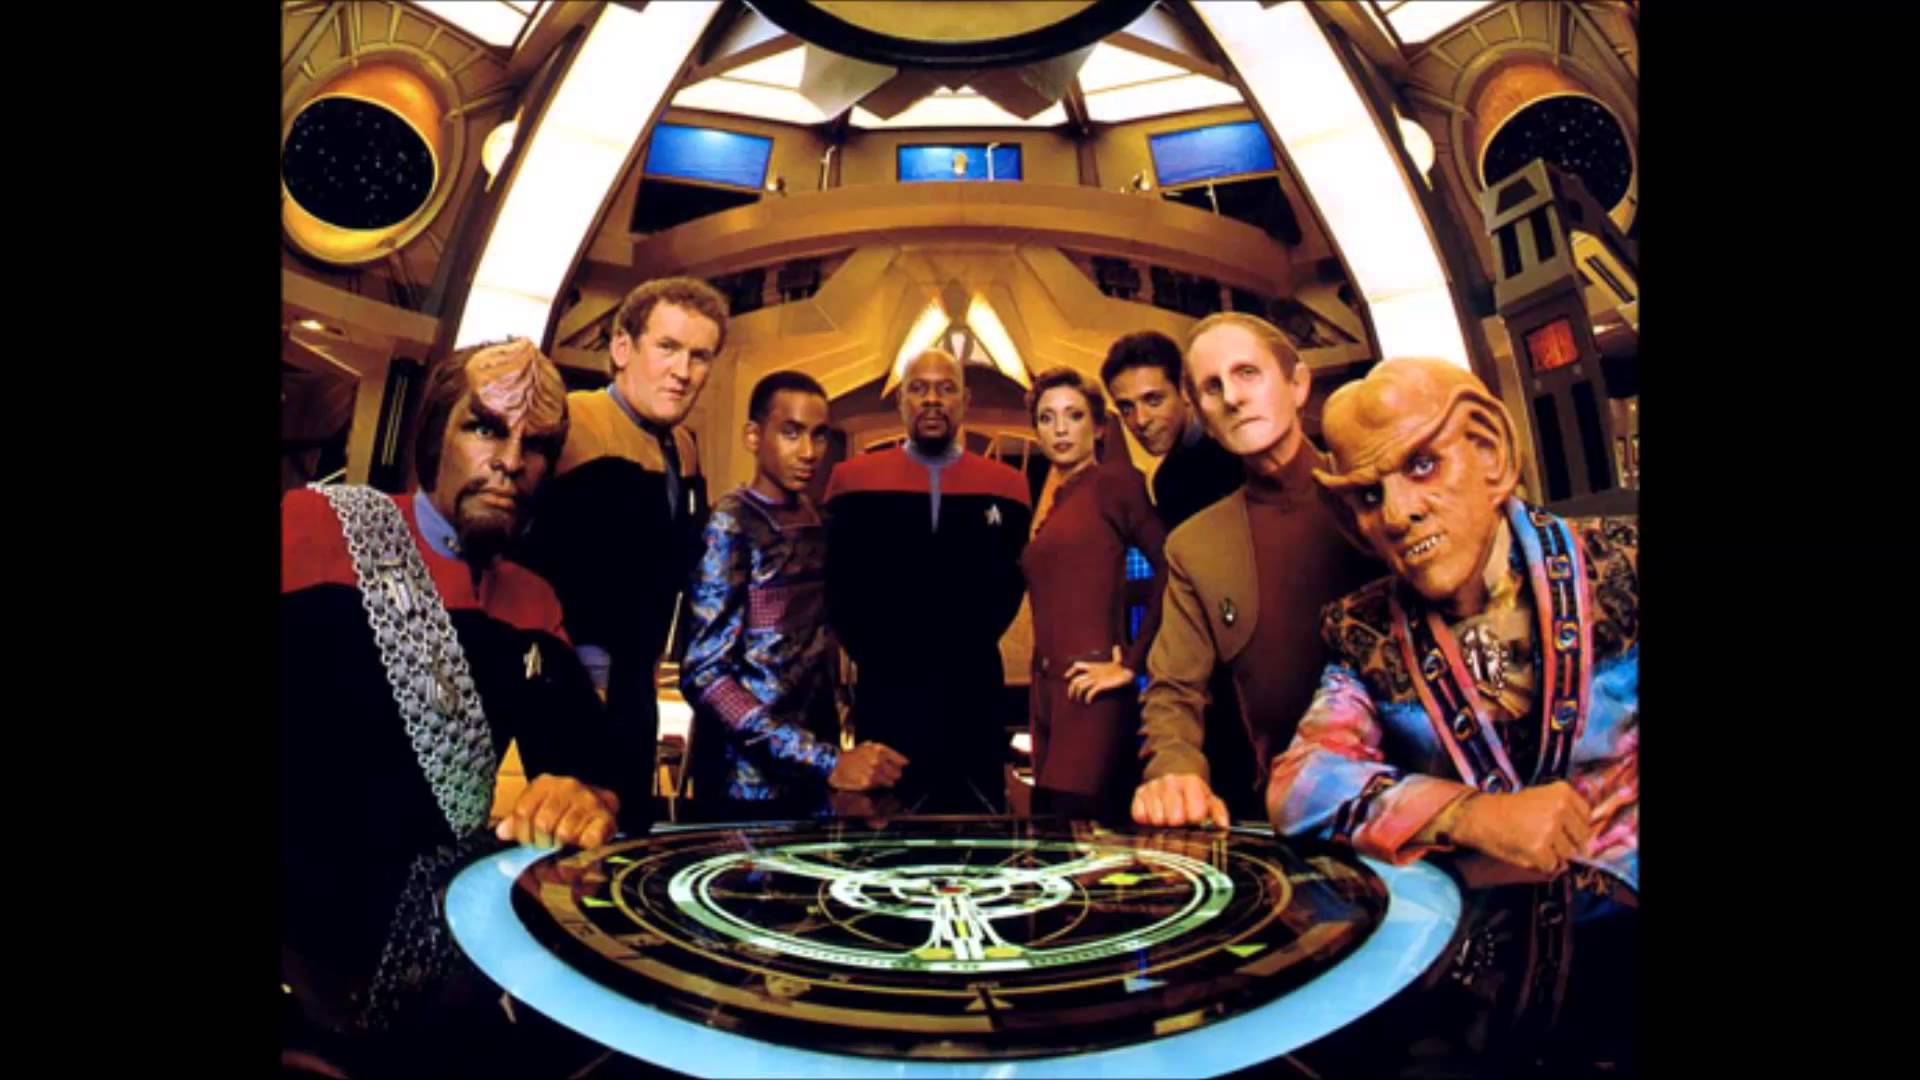 Star Trek: Deep Space Nine Pics, TV Show Collection